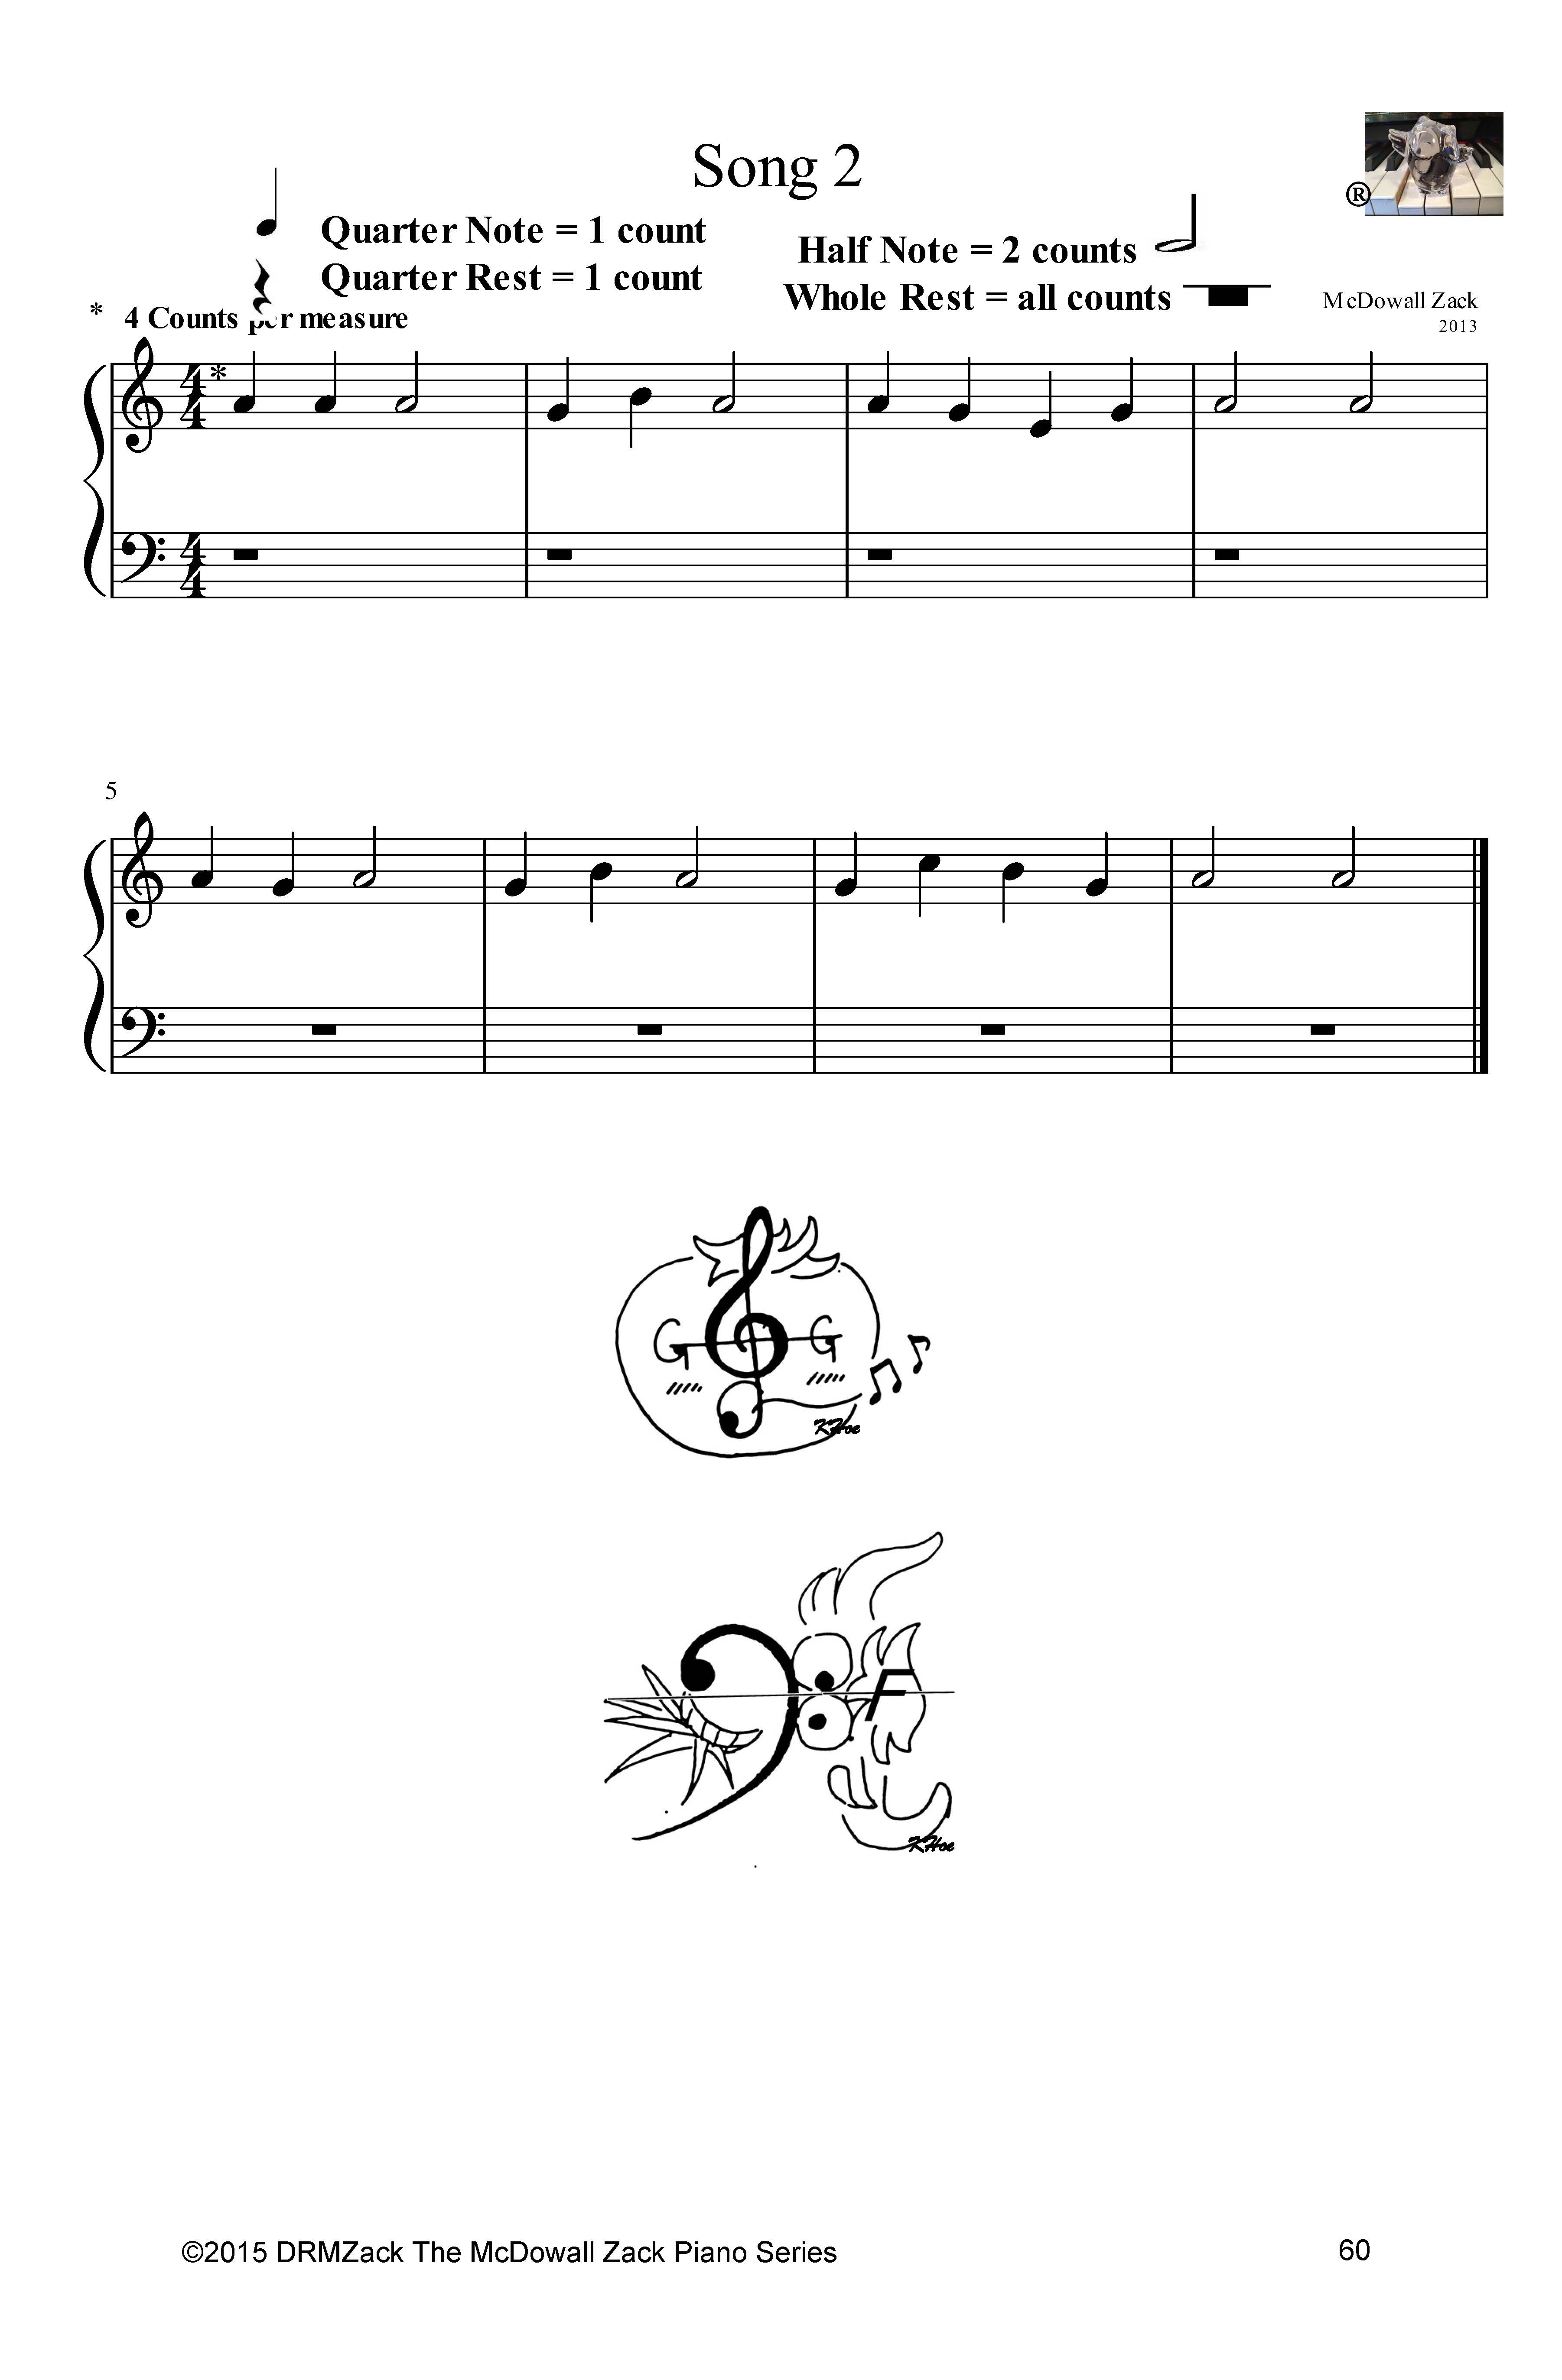 McDowall Zack Piano Method Series